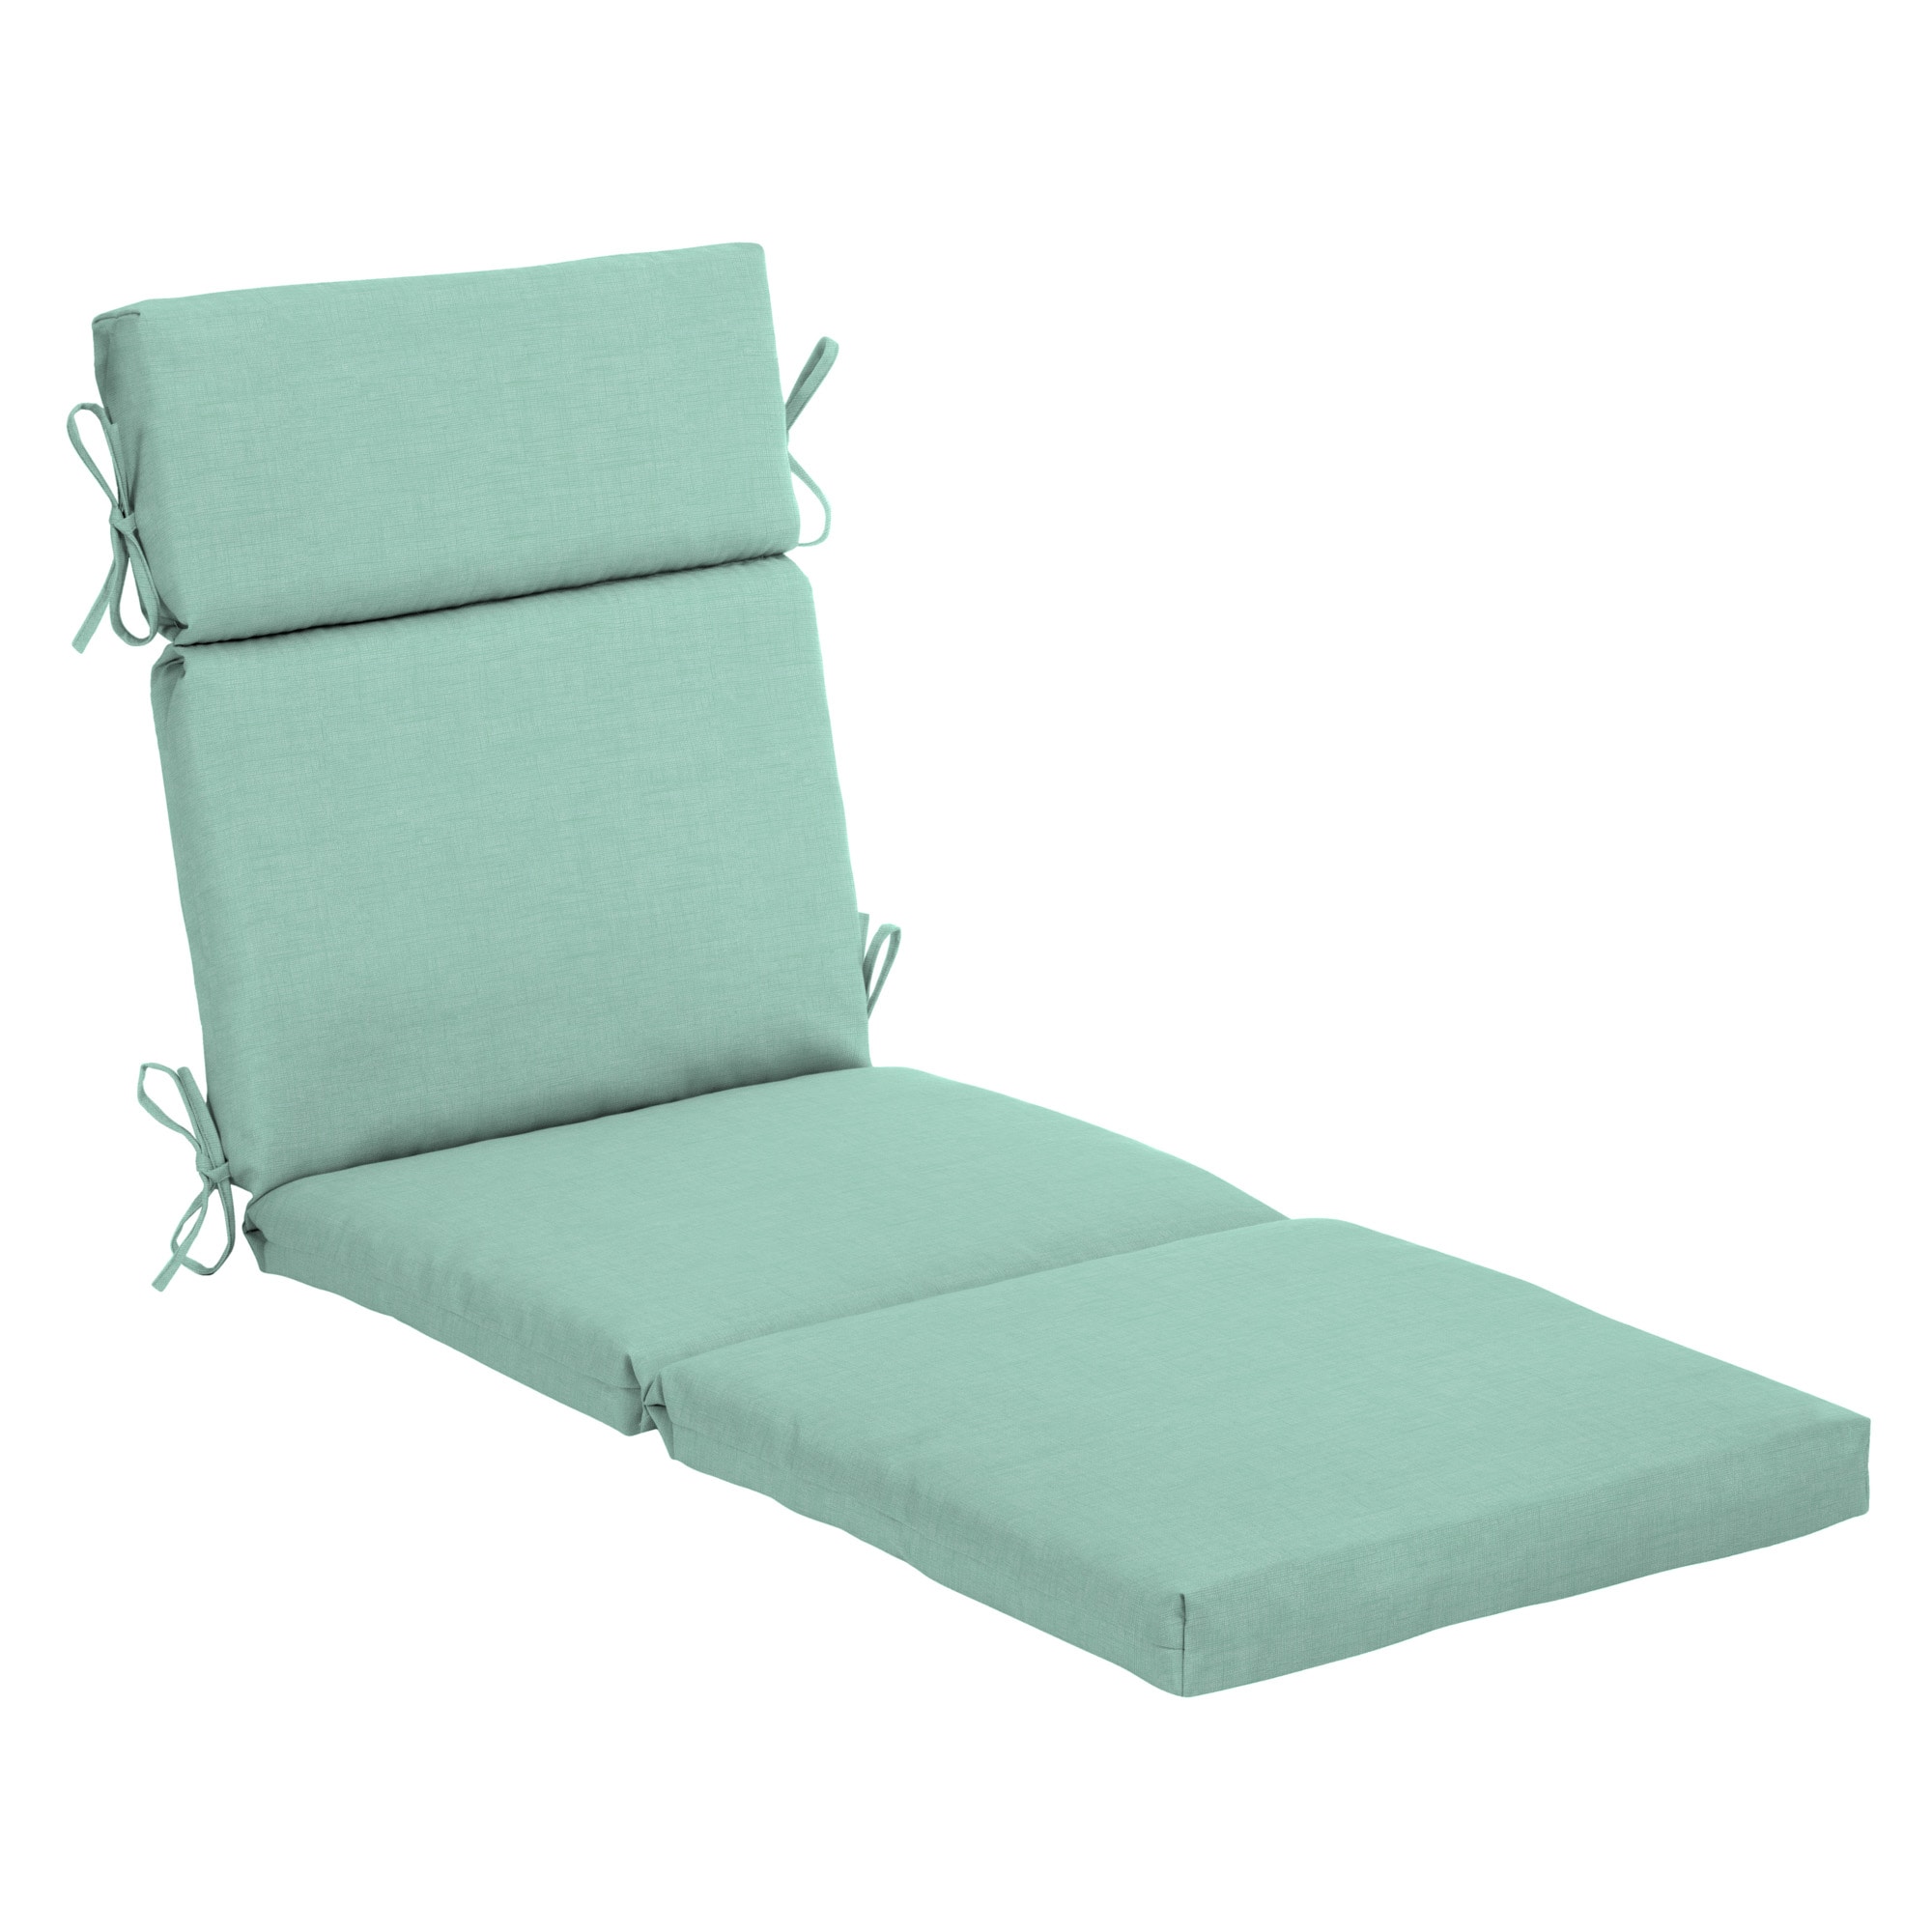 Chaise Lounge Cushion Green Blue Outdoor Patio Pool Deck Backyard Furniture Pad 